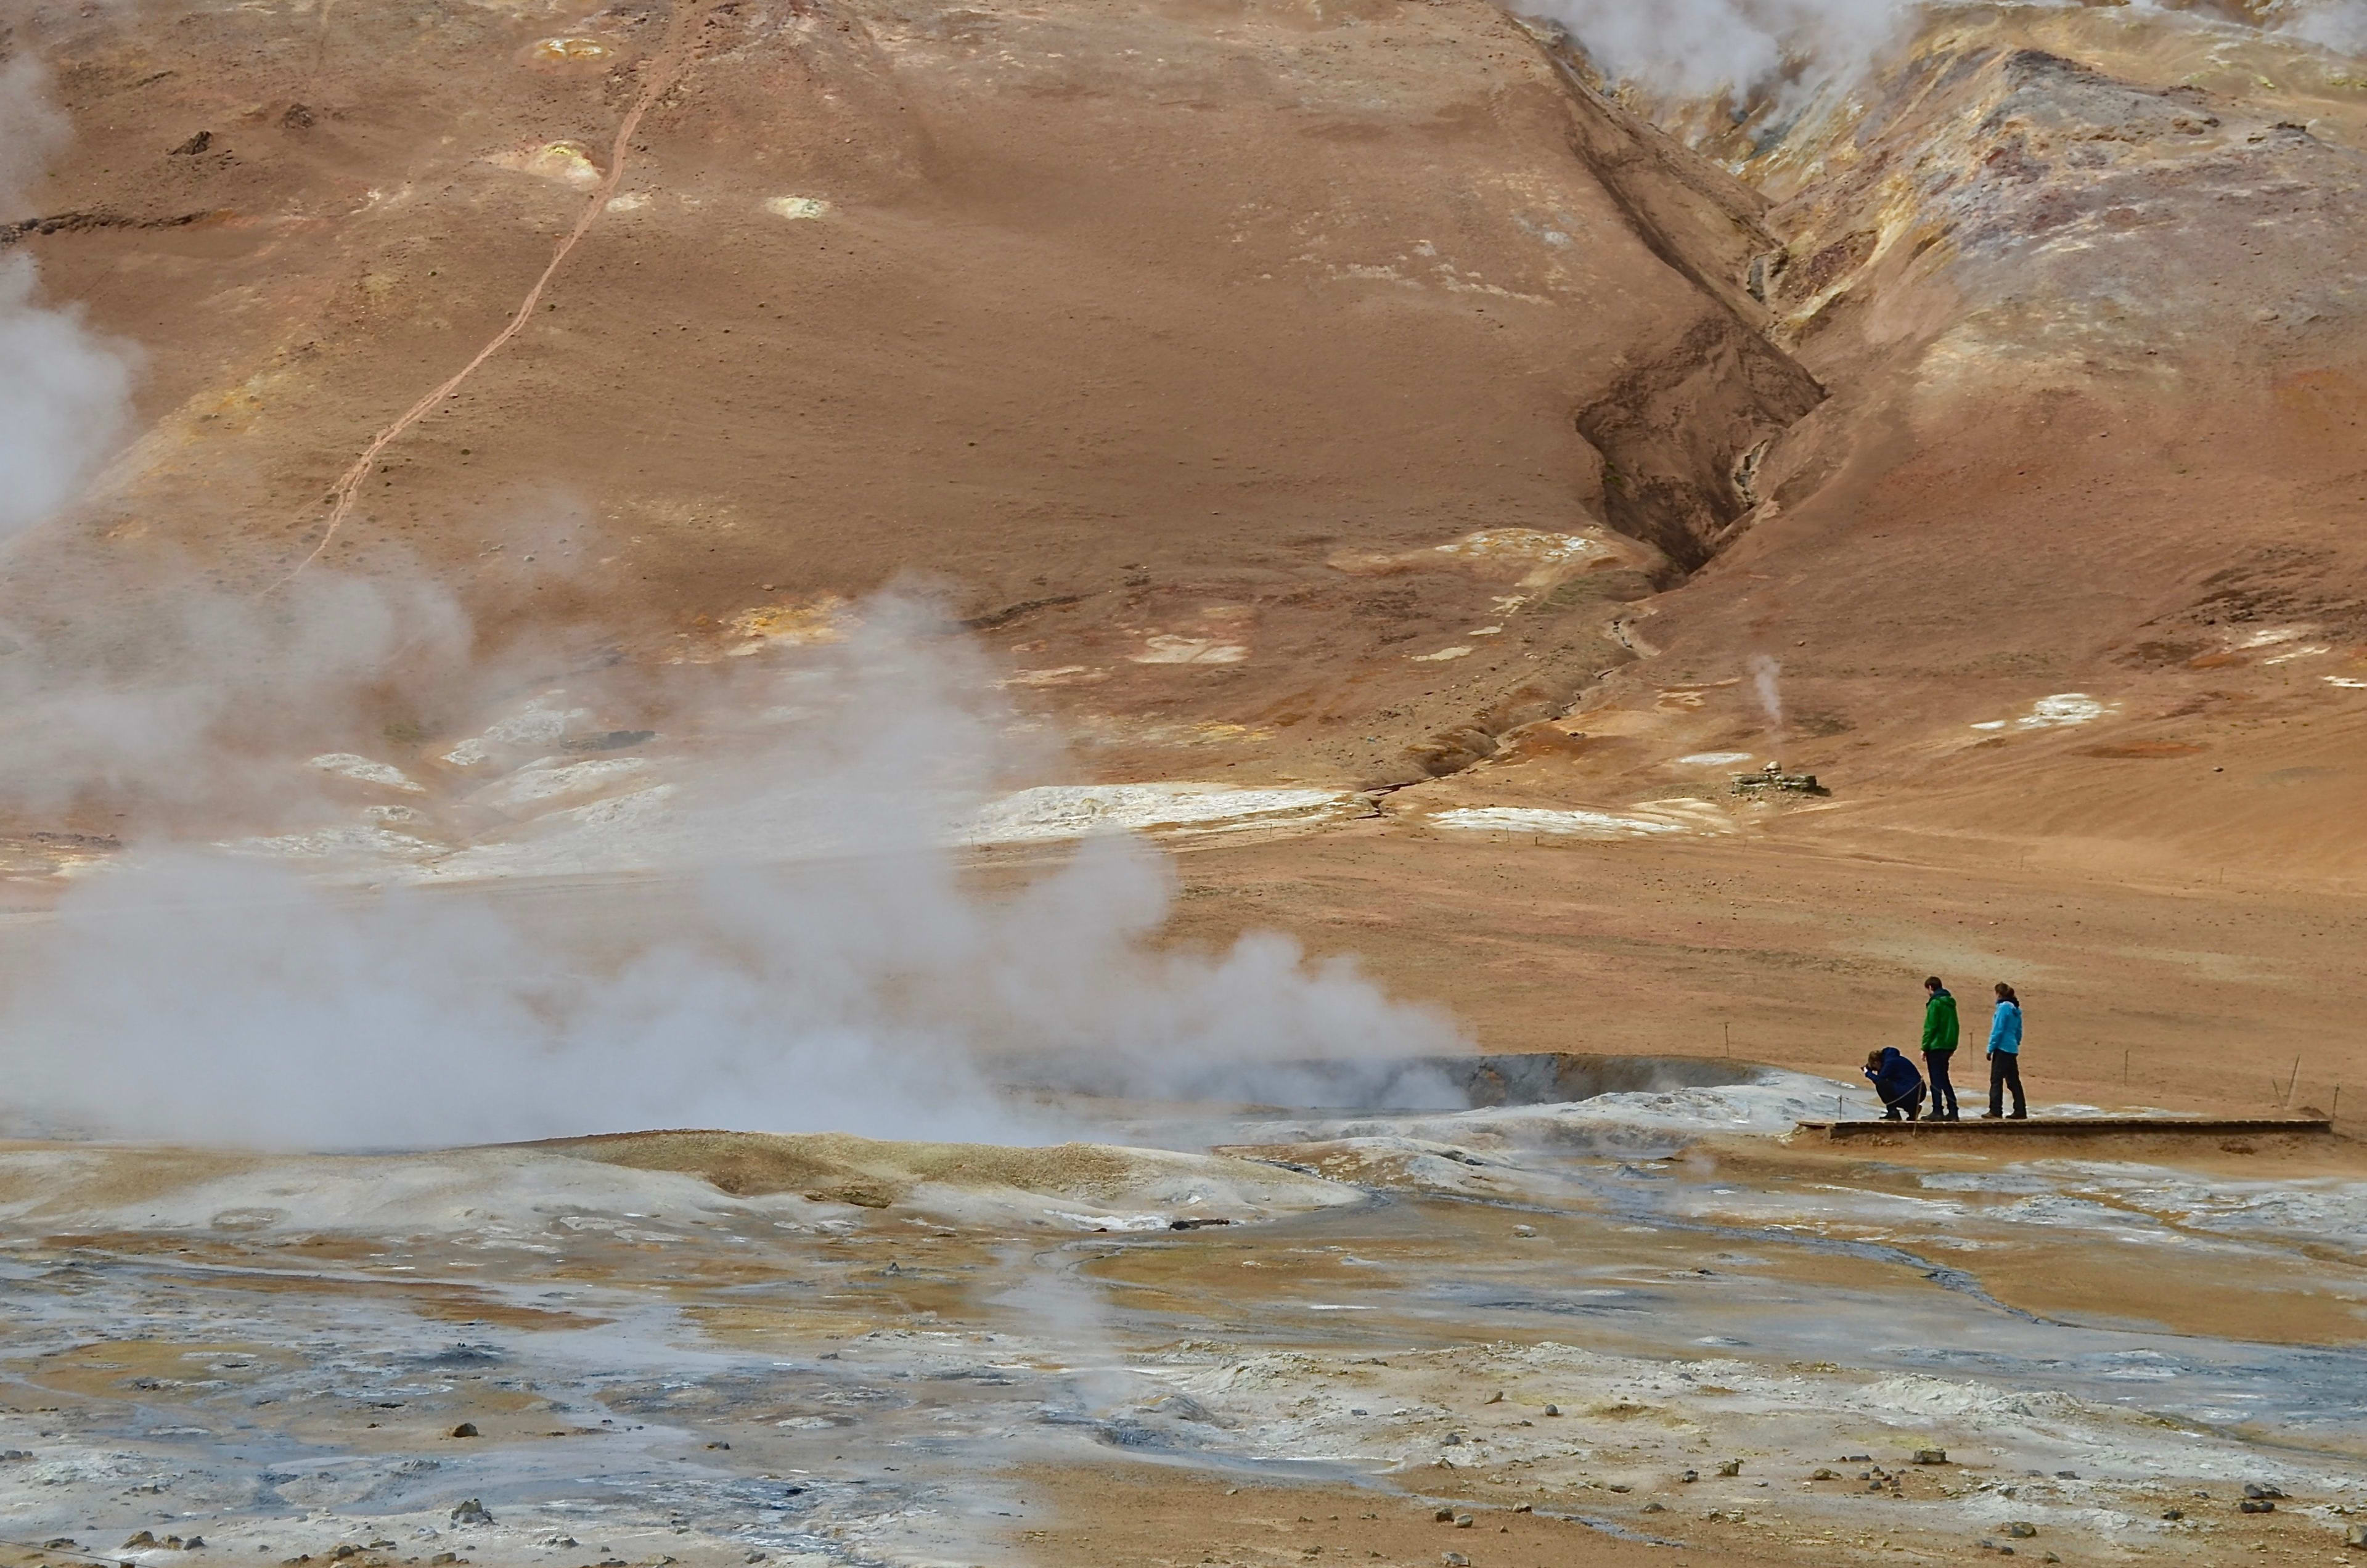 namafjall volcanic area with steam